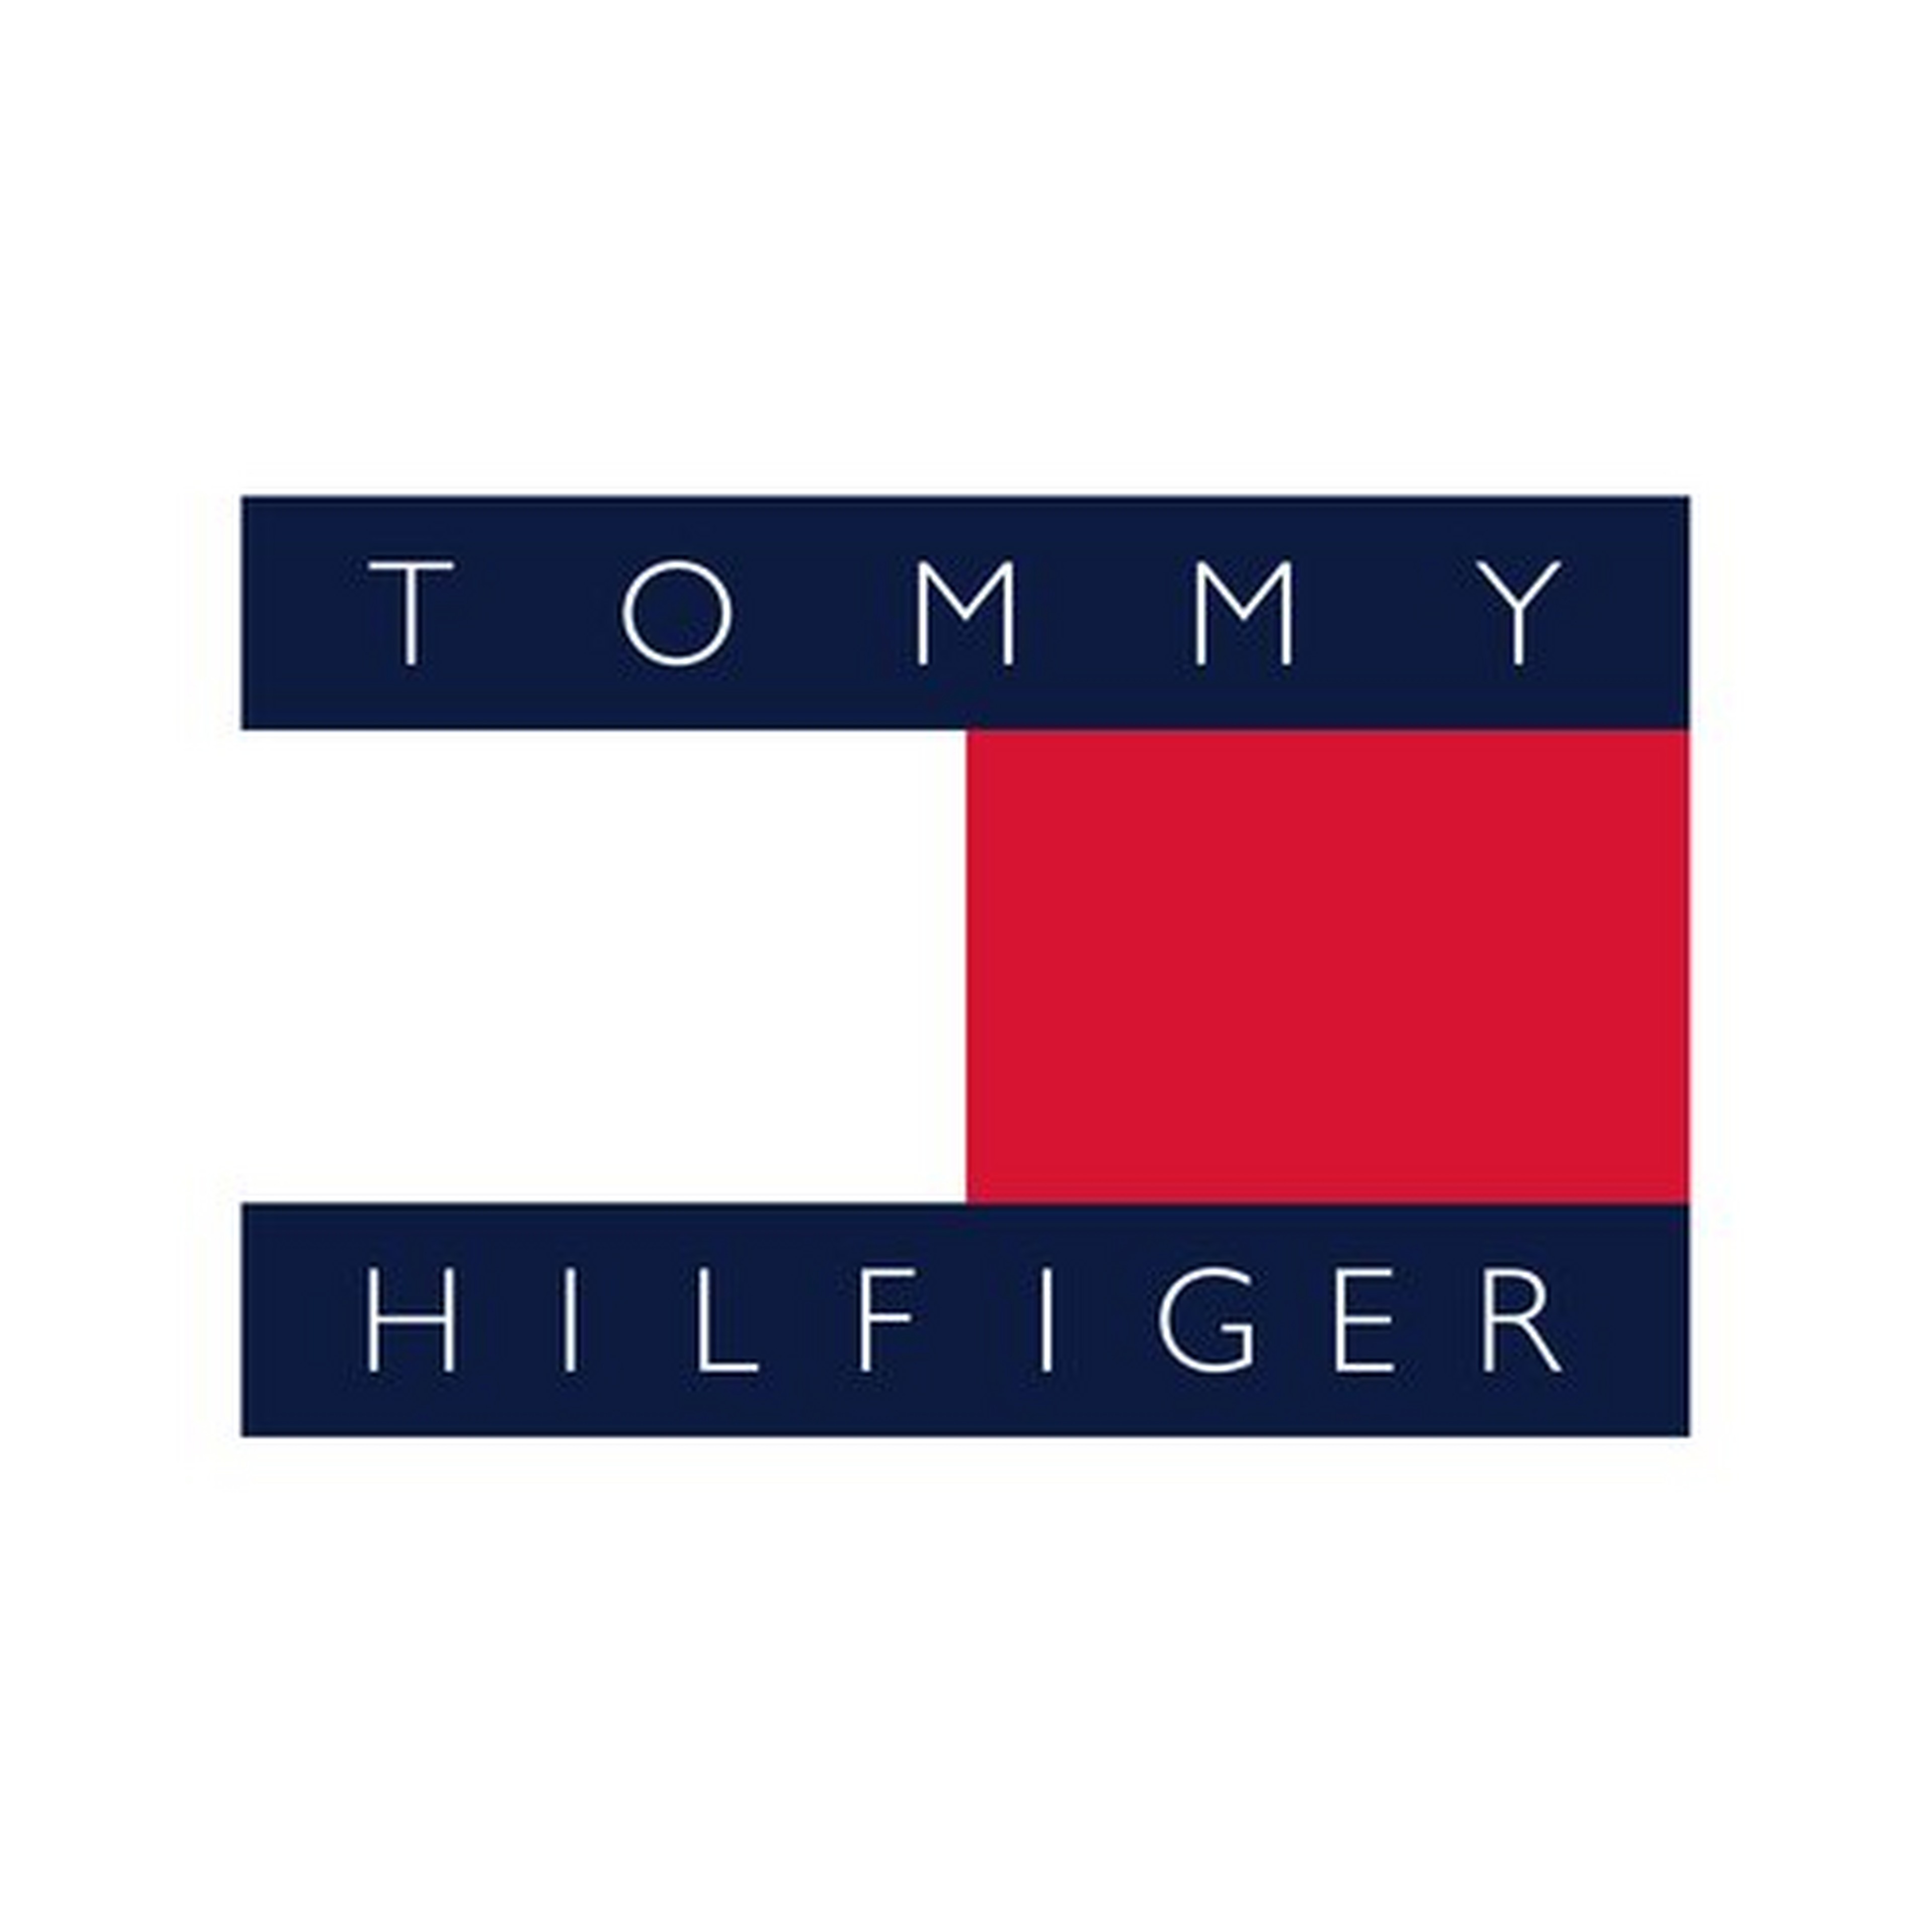 Tommy Hilfiger logotype